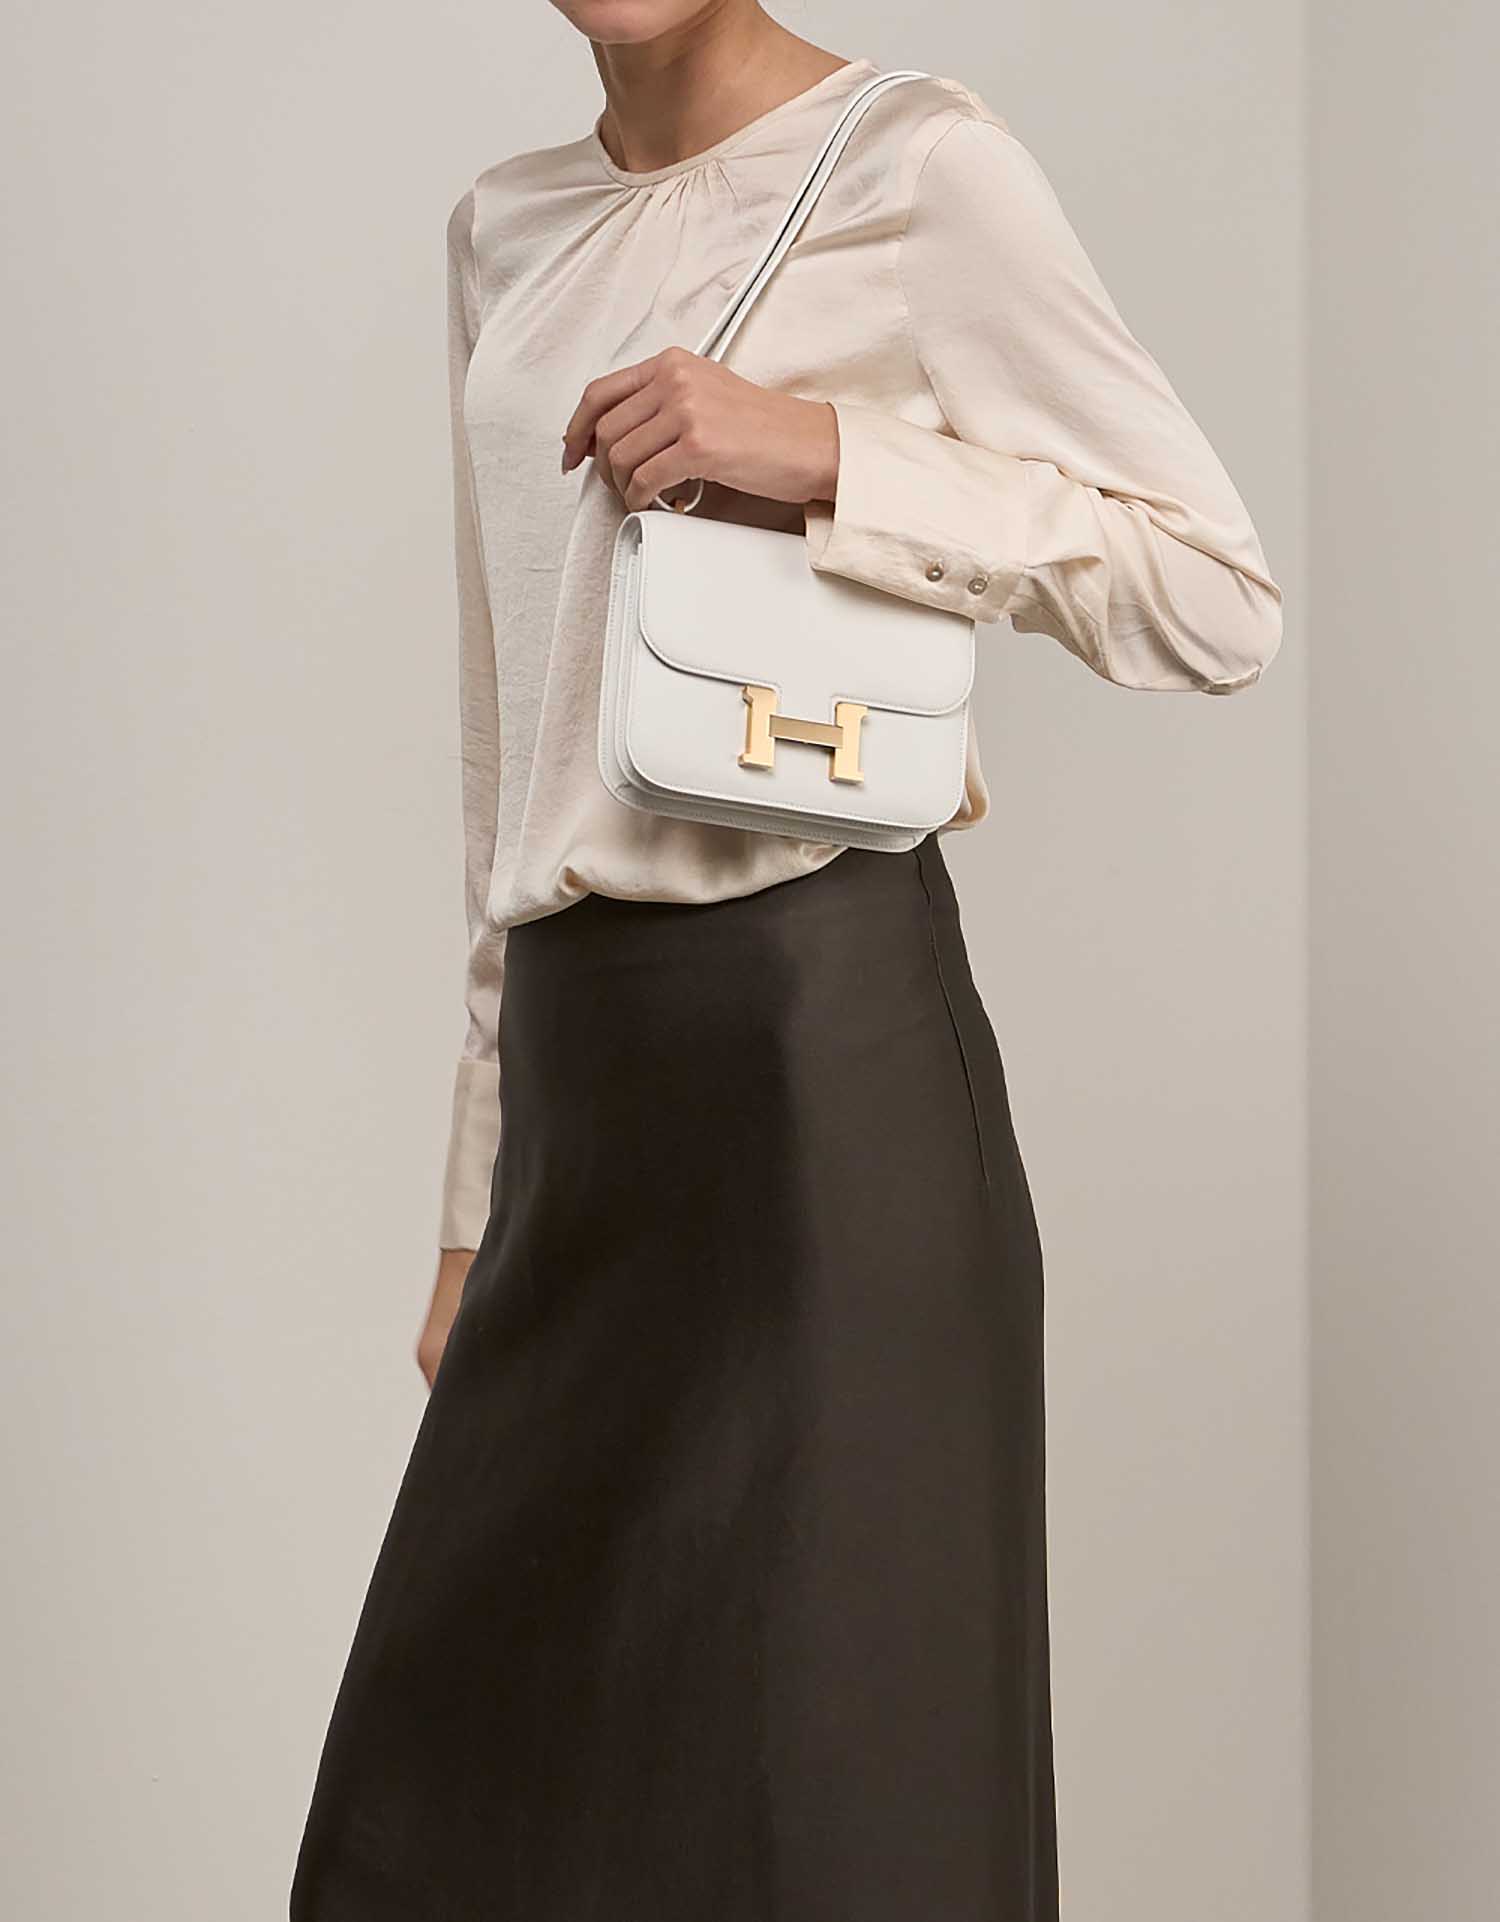 Hermès Constance 18 Swift New White on Model | Sell your designer bag